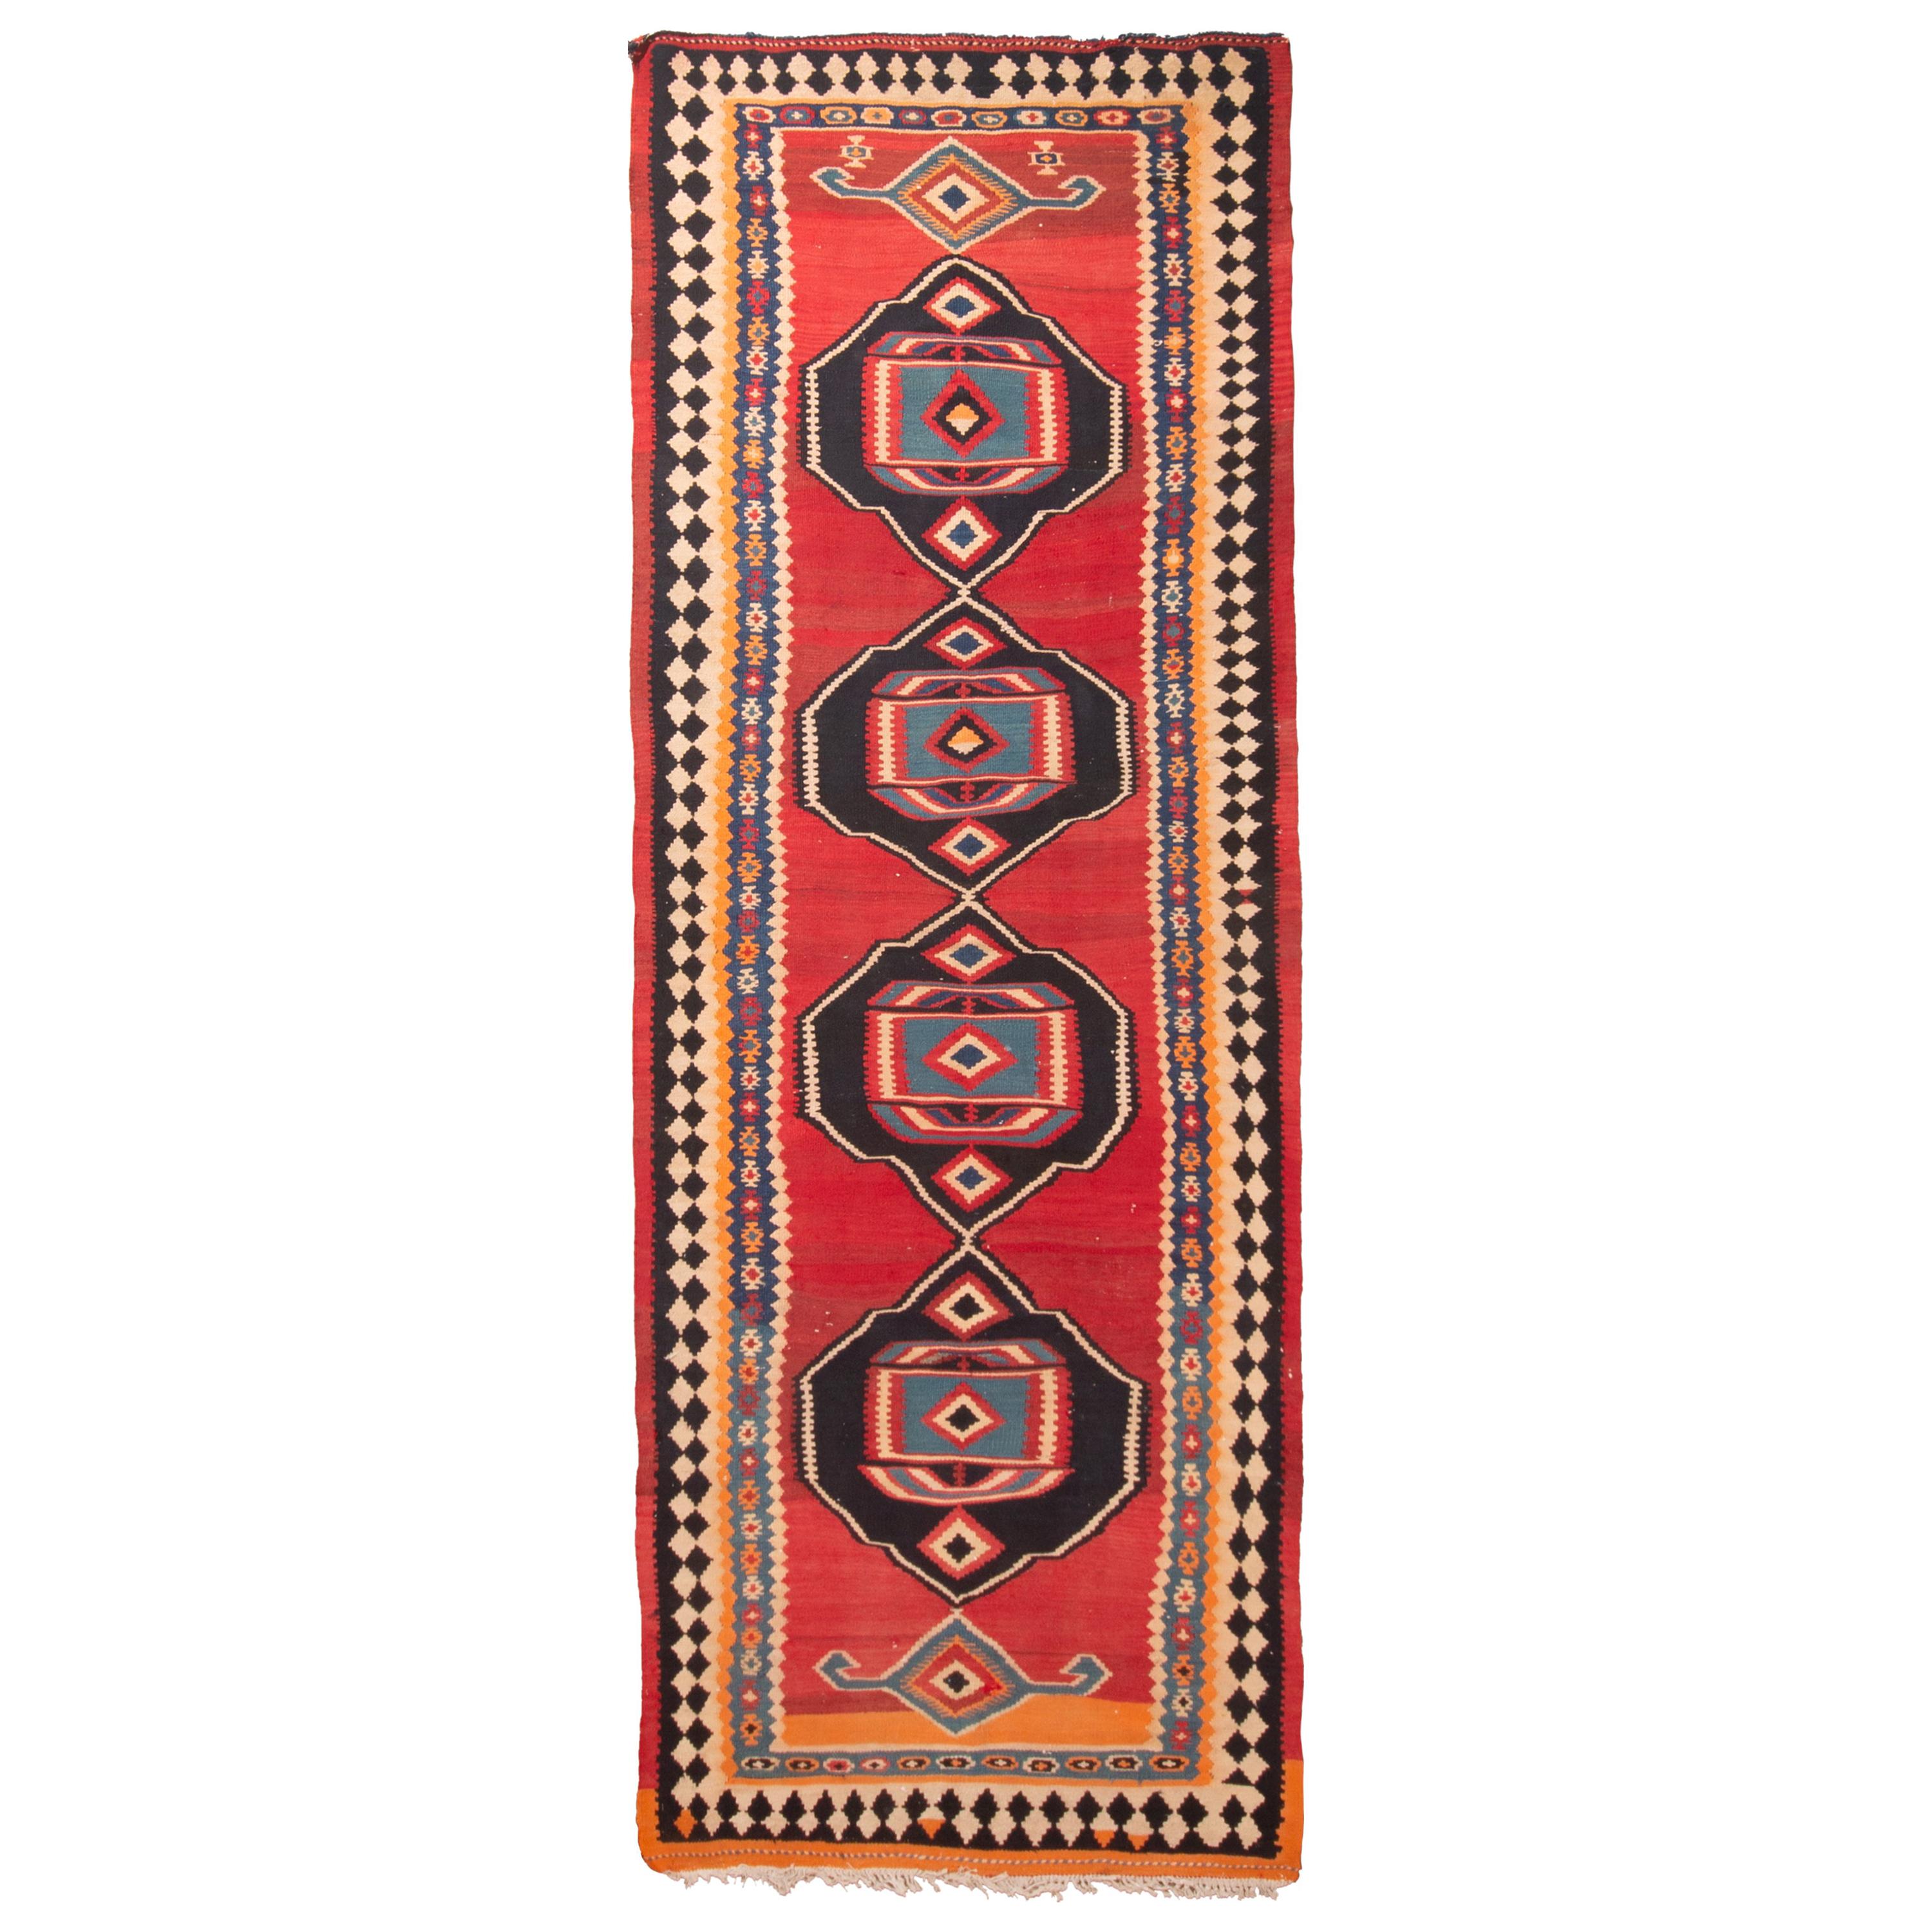 Antique Kurdish Persian Red and Black Wool Kilim